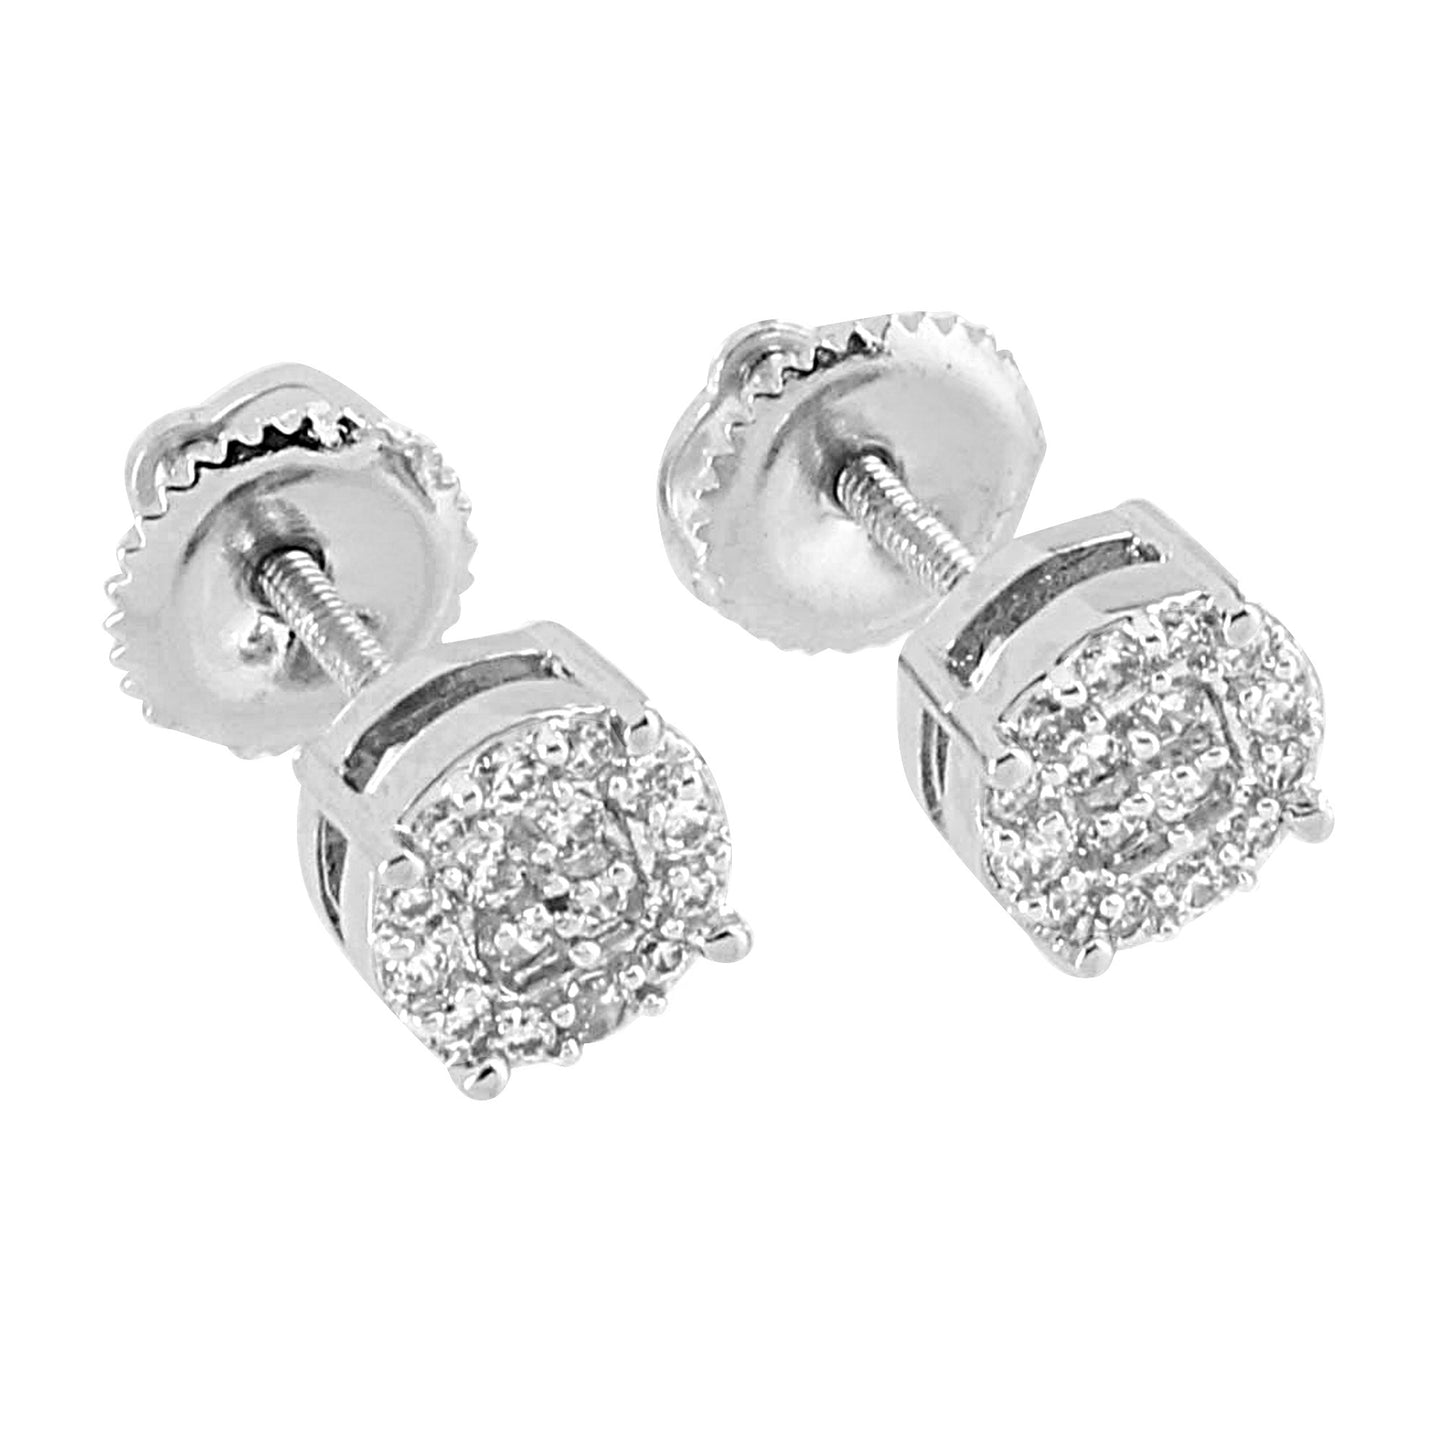 Round Cluster Set Earrings Round Studs 14K White Gold Finish Lab Diamonds Screw Back